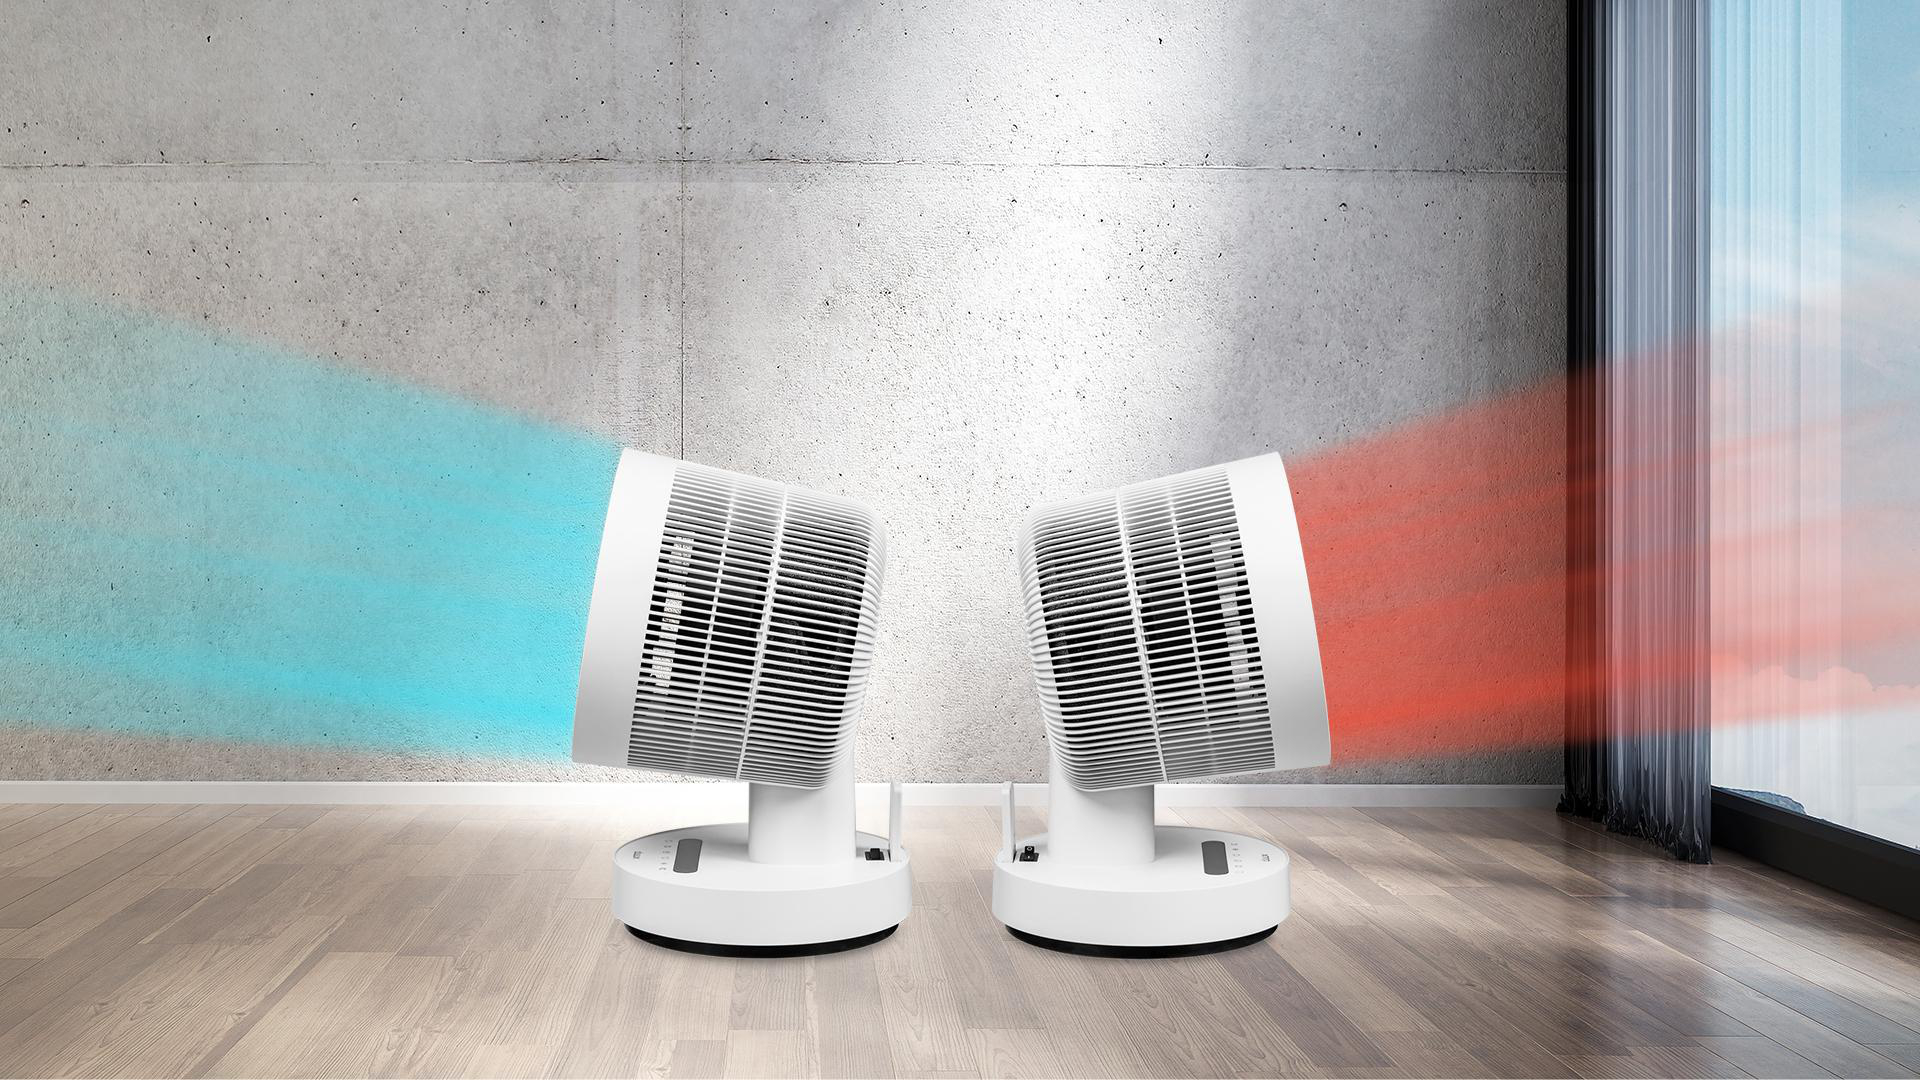 Cooling Weiß Heating (1500 + Fan Tischventilator Stream DUUX Watt)